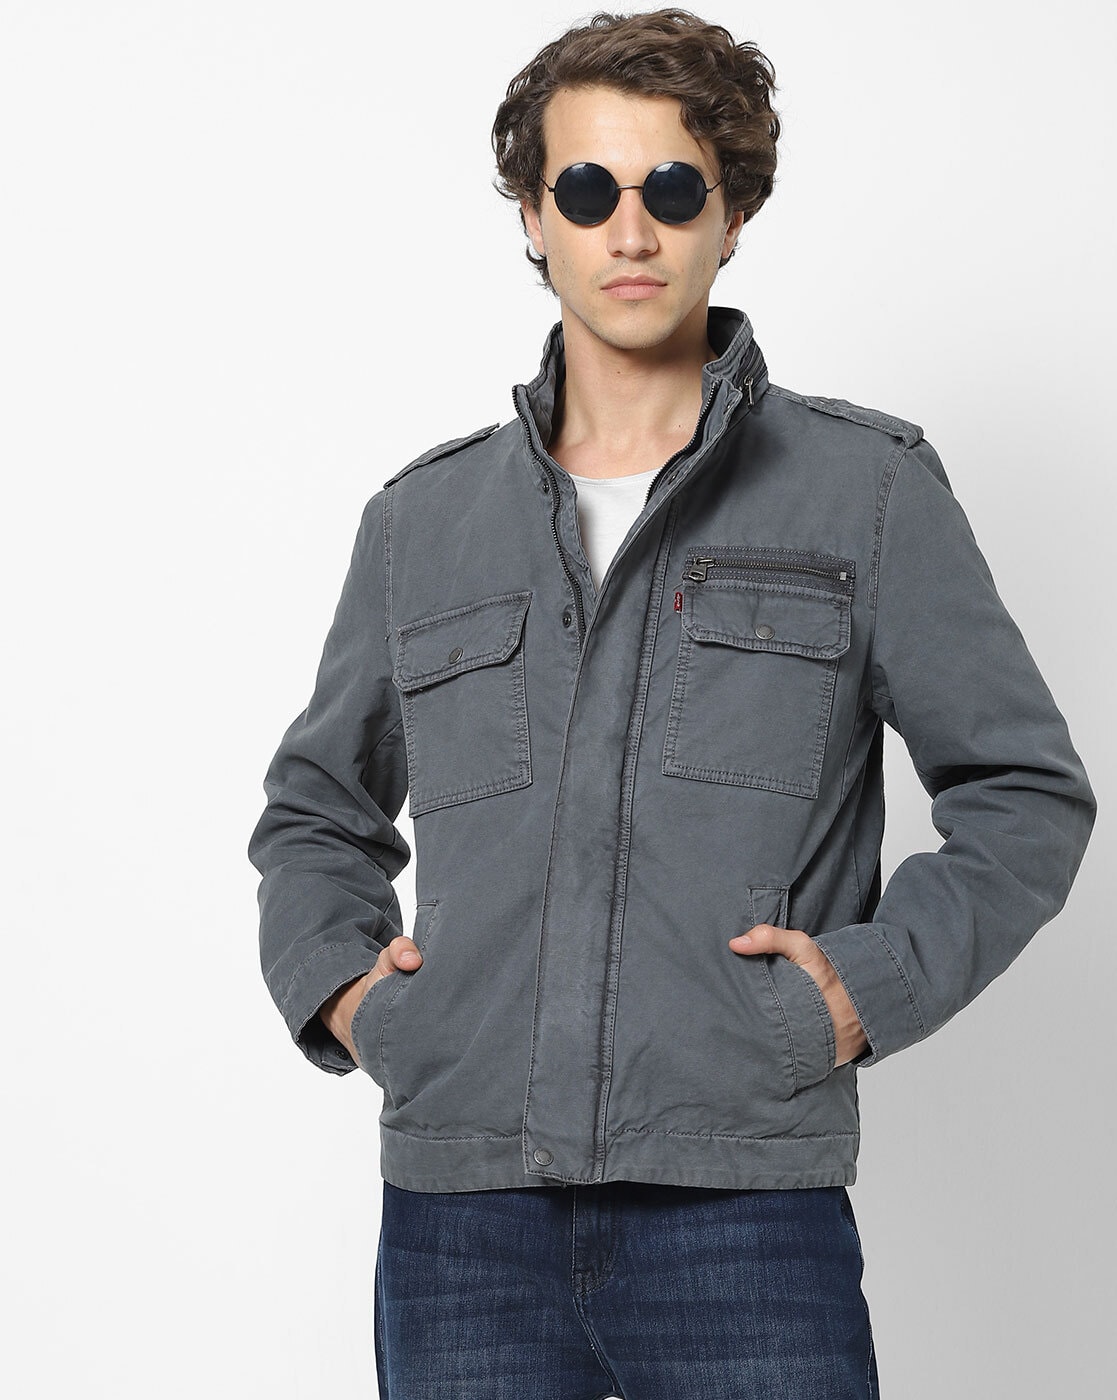 Buy Grey Jackets & Coats for Men by LEVIS Online 